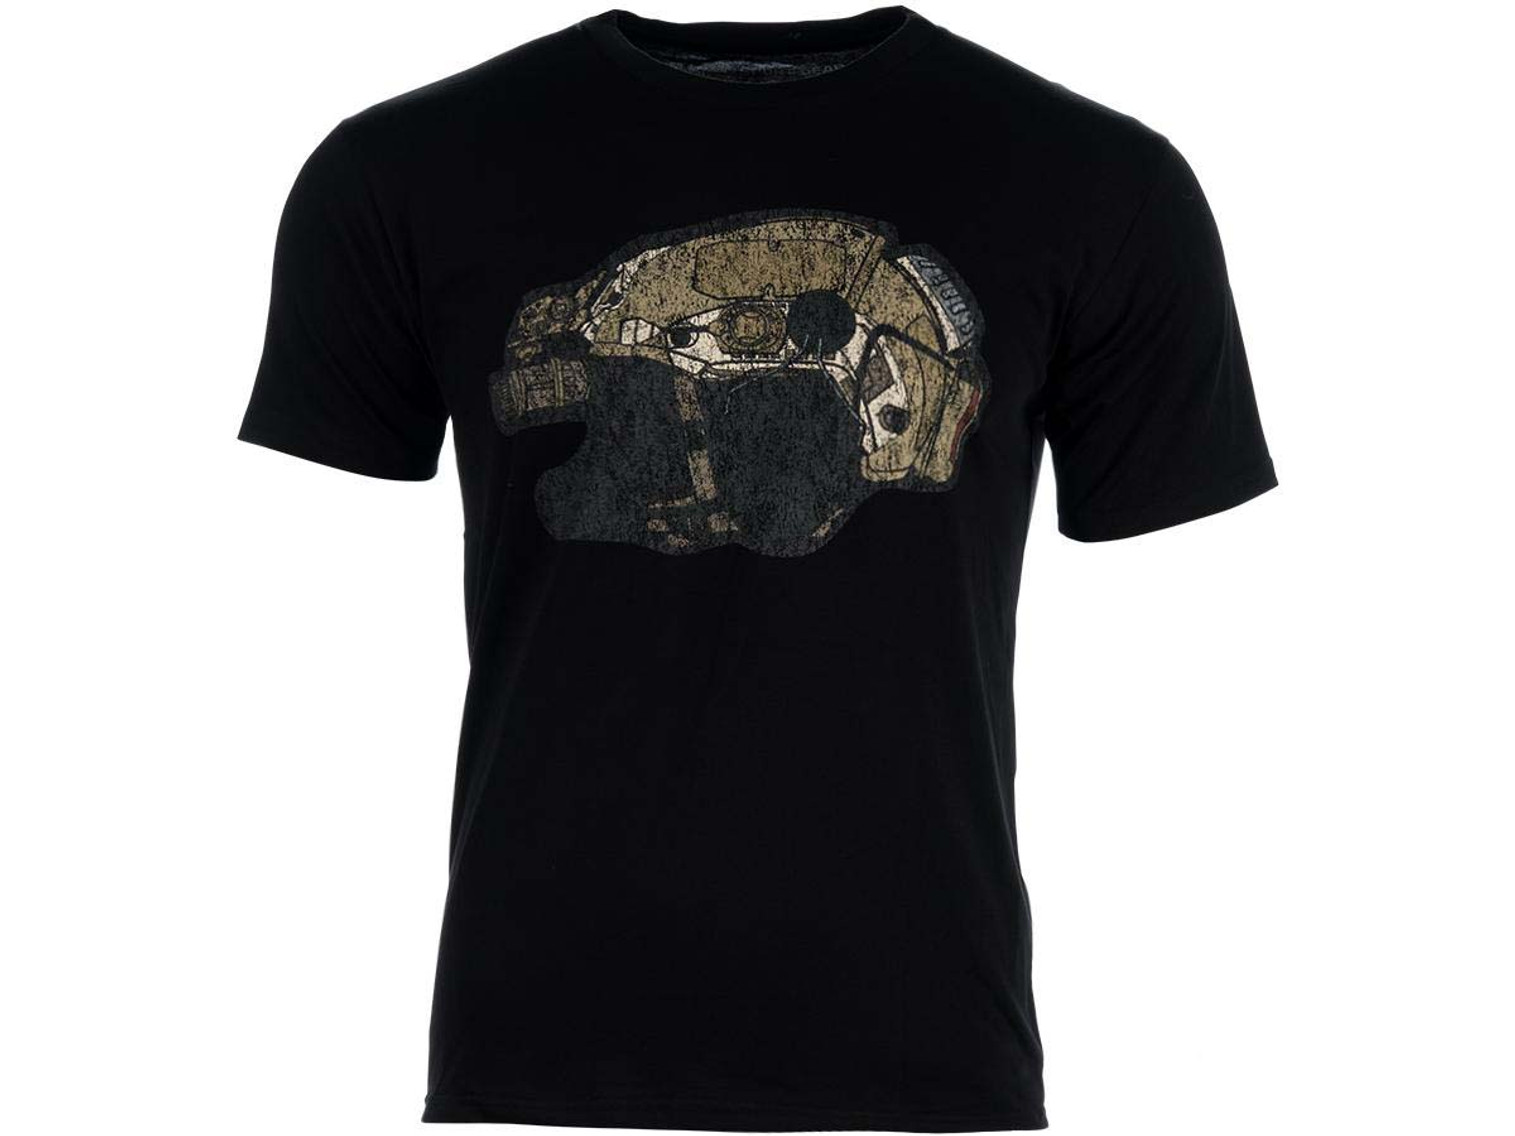 TMC "Helmet" One Way Dry T-Shirt - Black